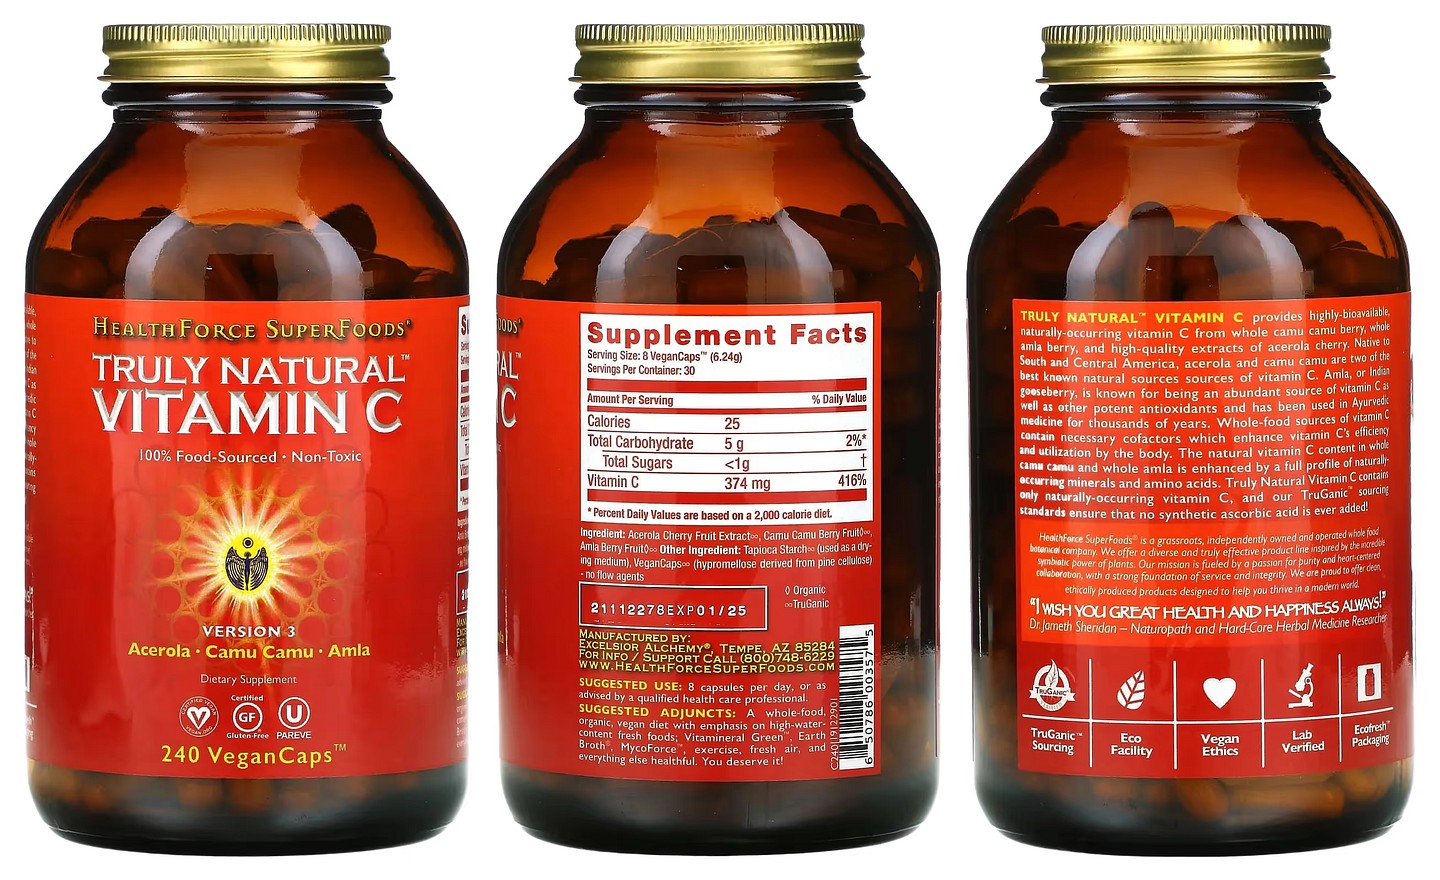 HealthForce Superfoods, Truly Natural Vitamin C packaging